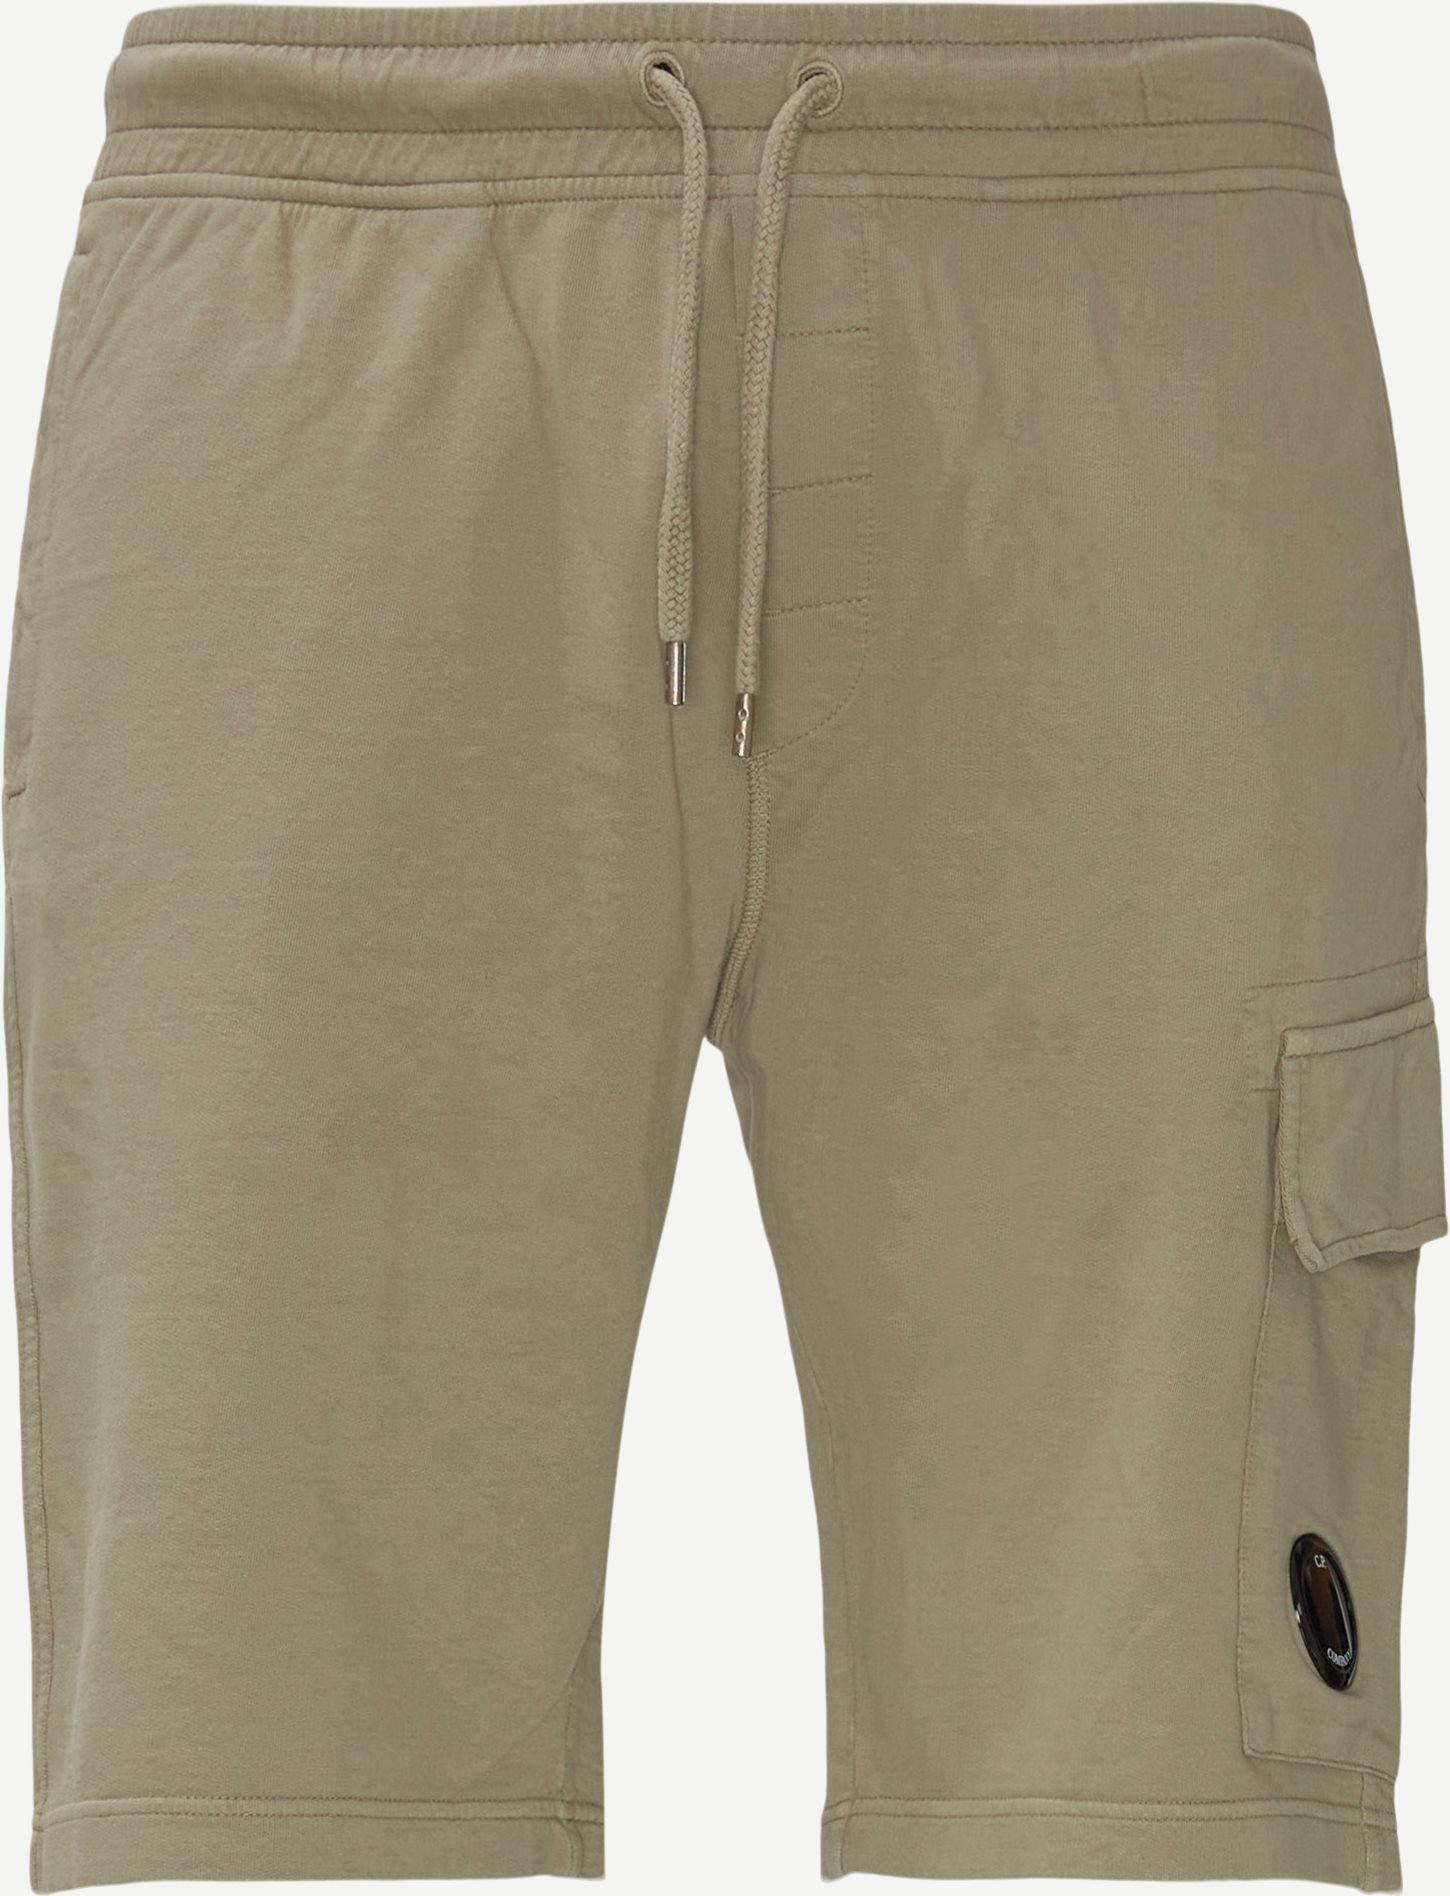 Sweat Bermuda Cargo Shorts - Shorts - Regular fit - Sand